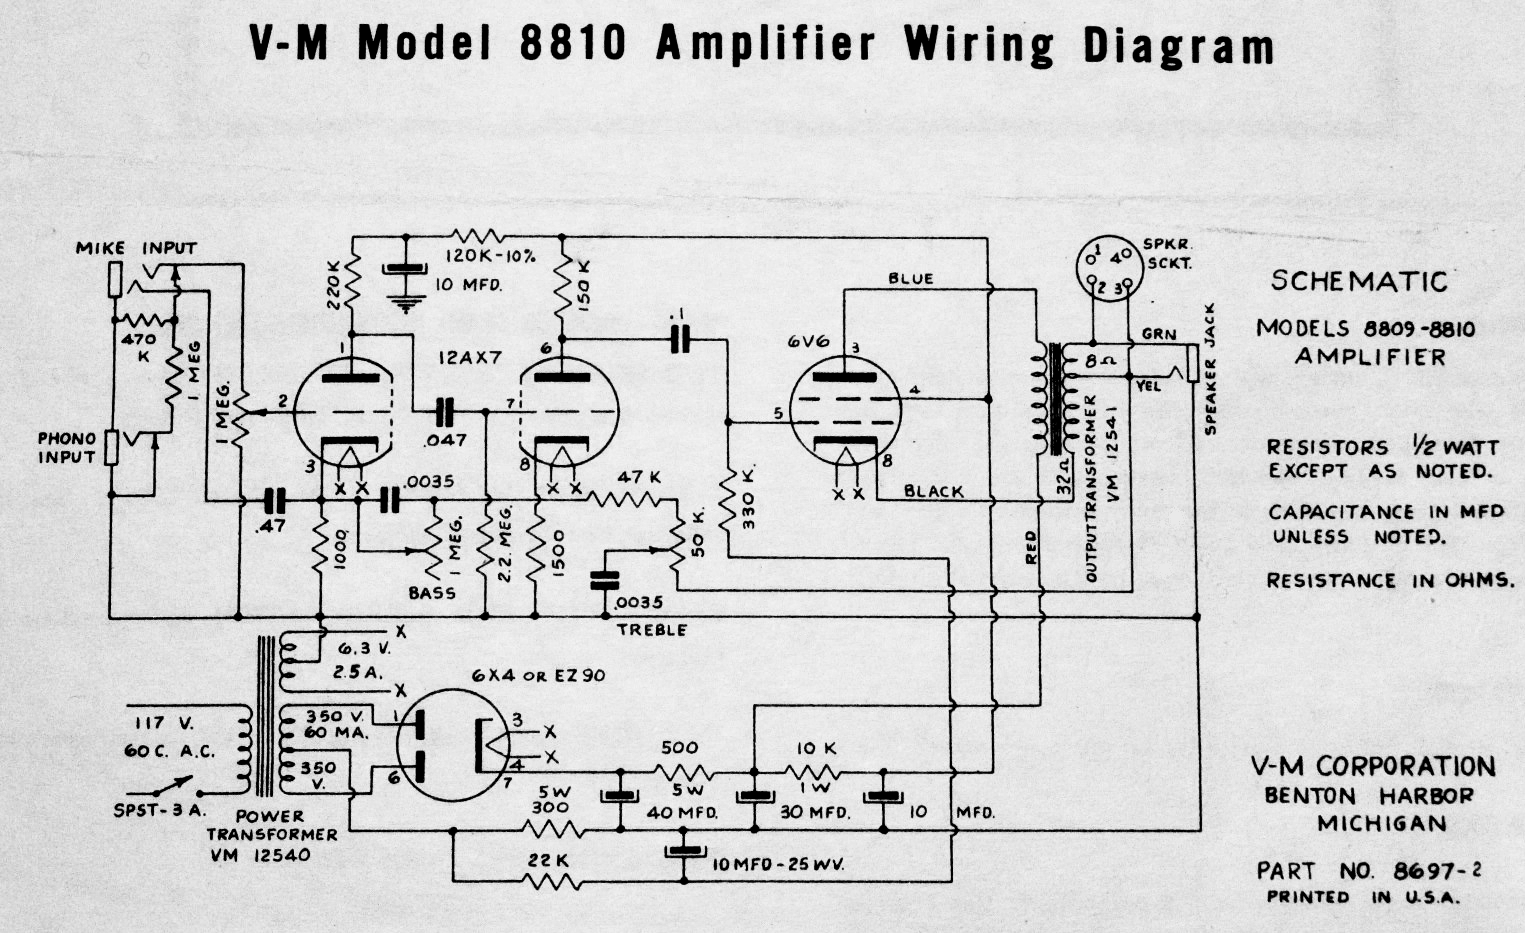 Voice-of-Music Model 8809-8810 Amplifier Schematic